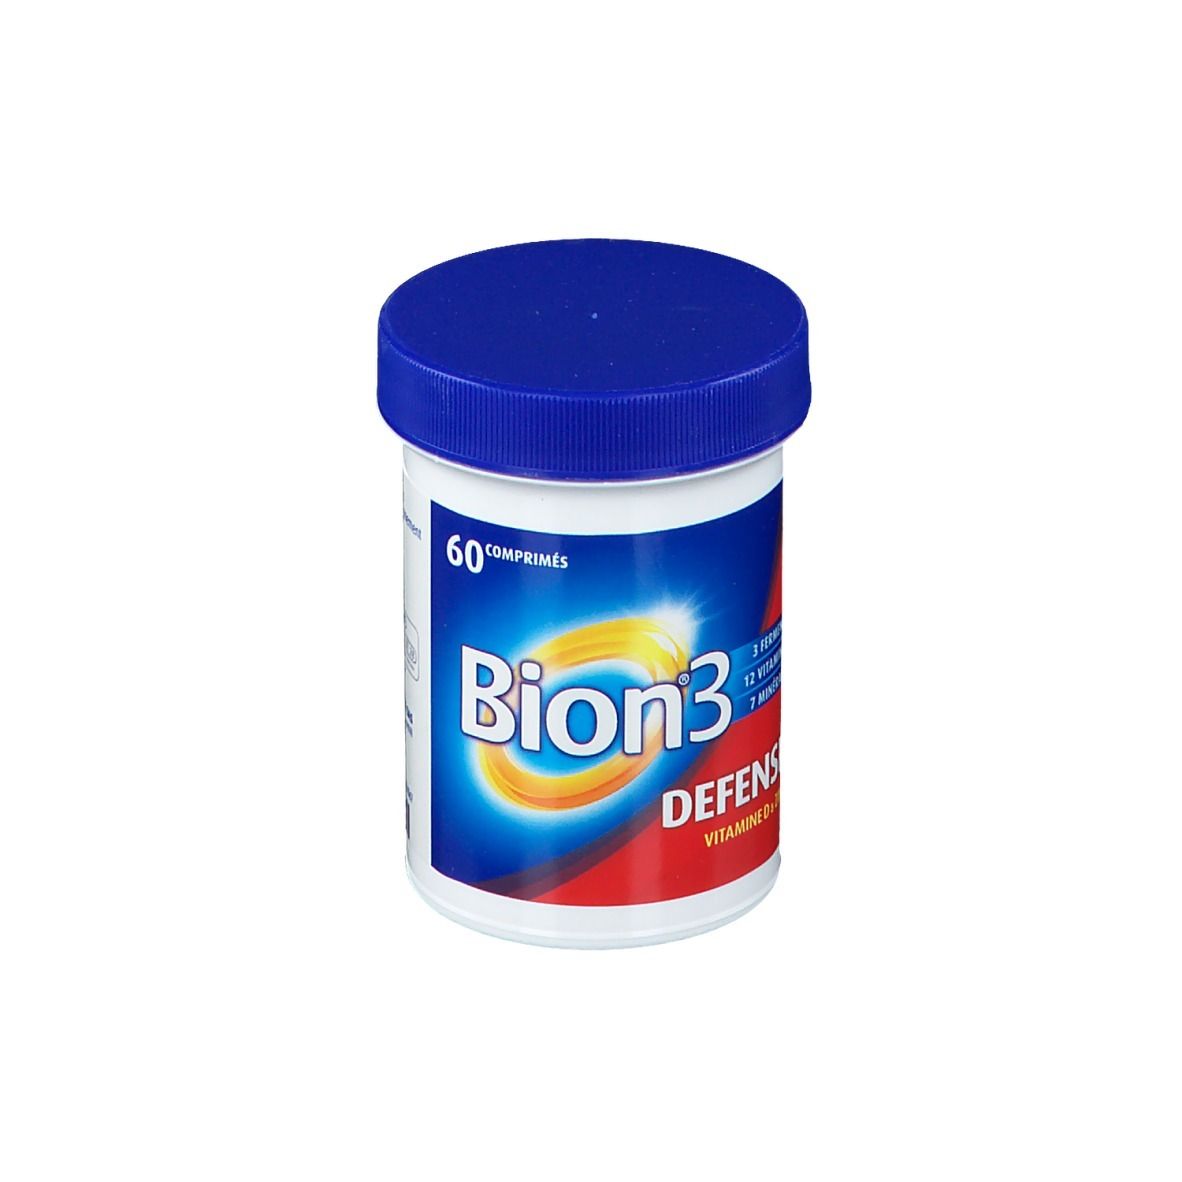 Bion®3 Defense